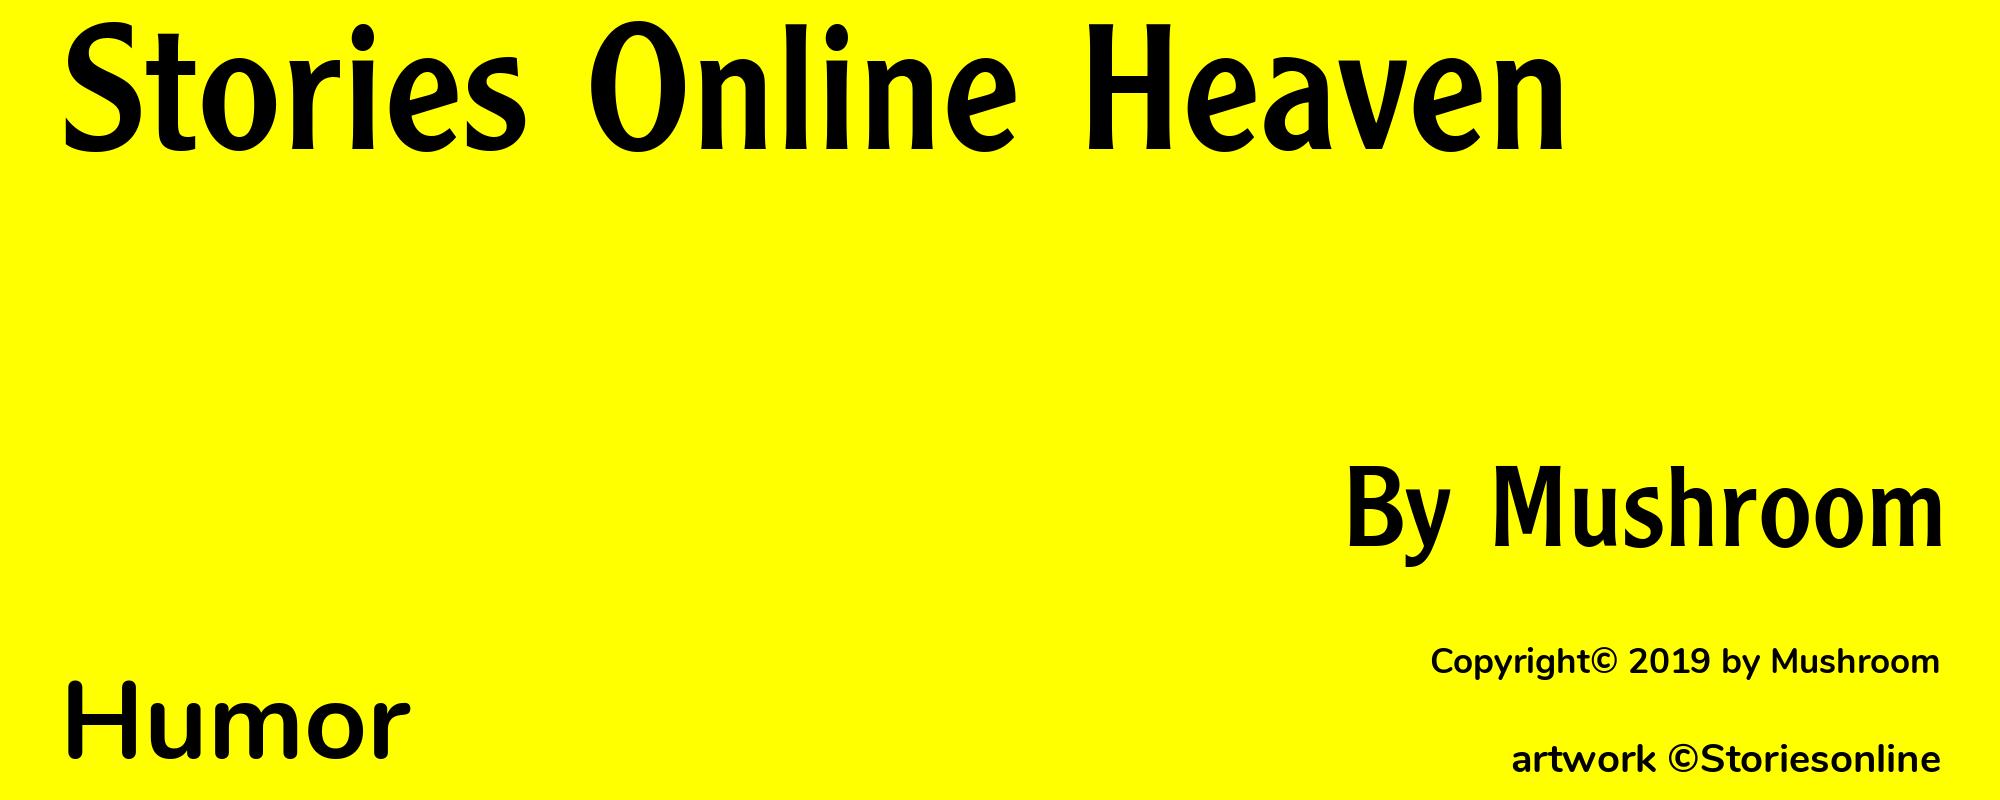 Stories Online Heaven - Cover